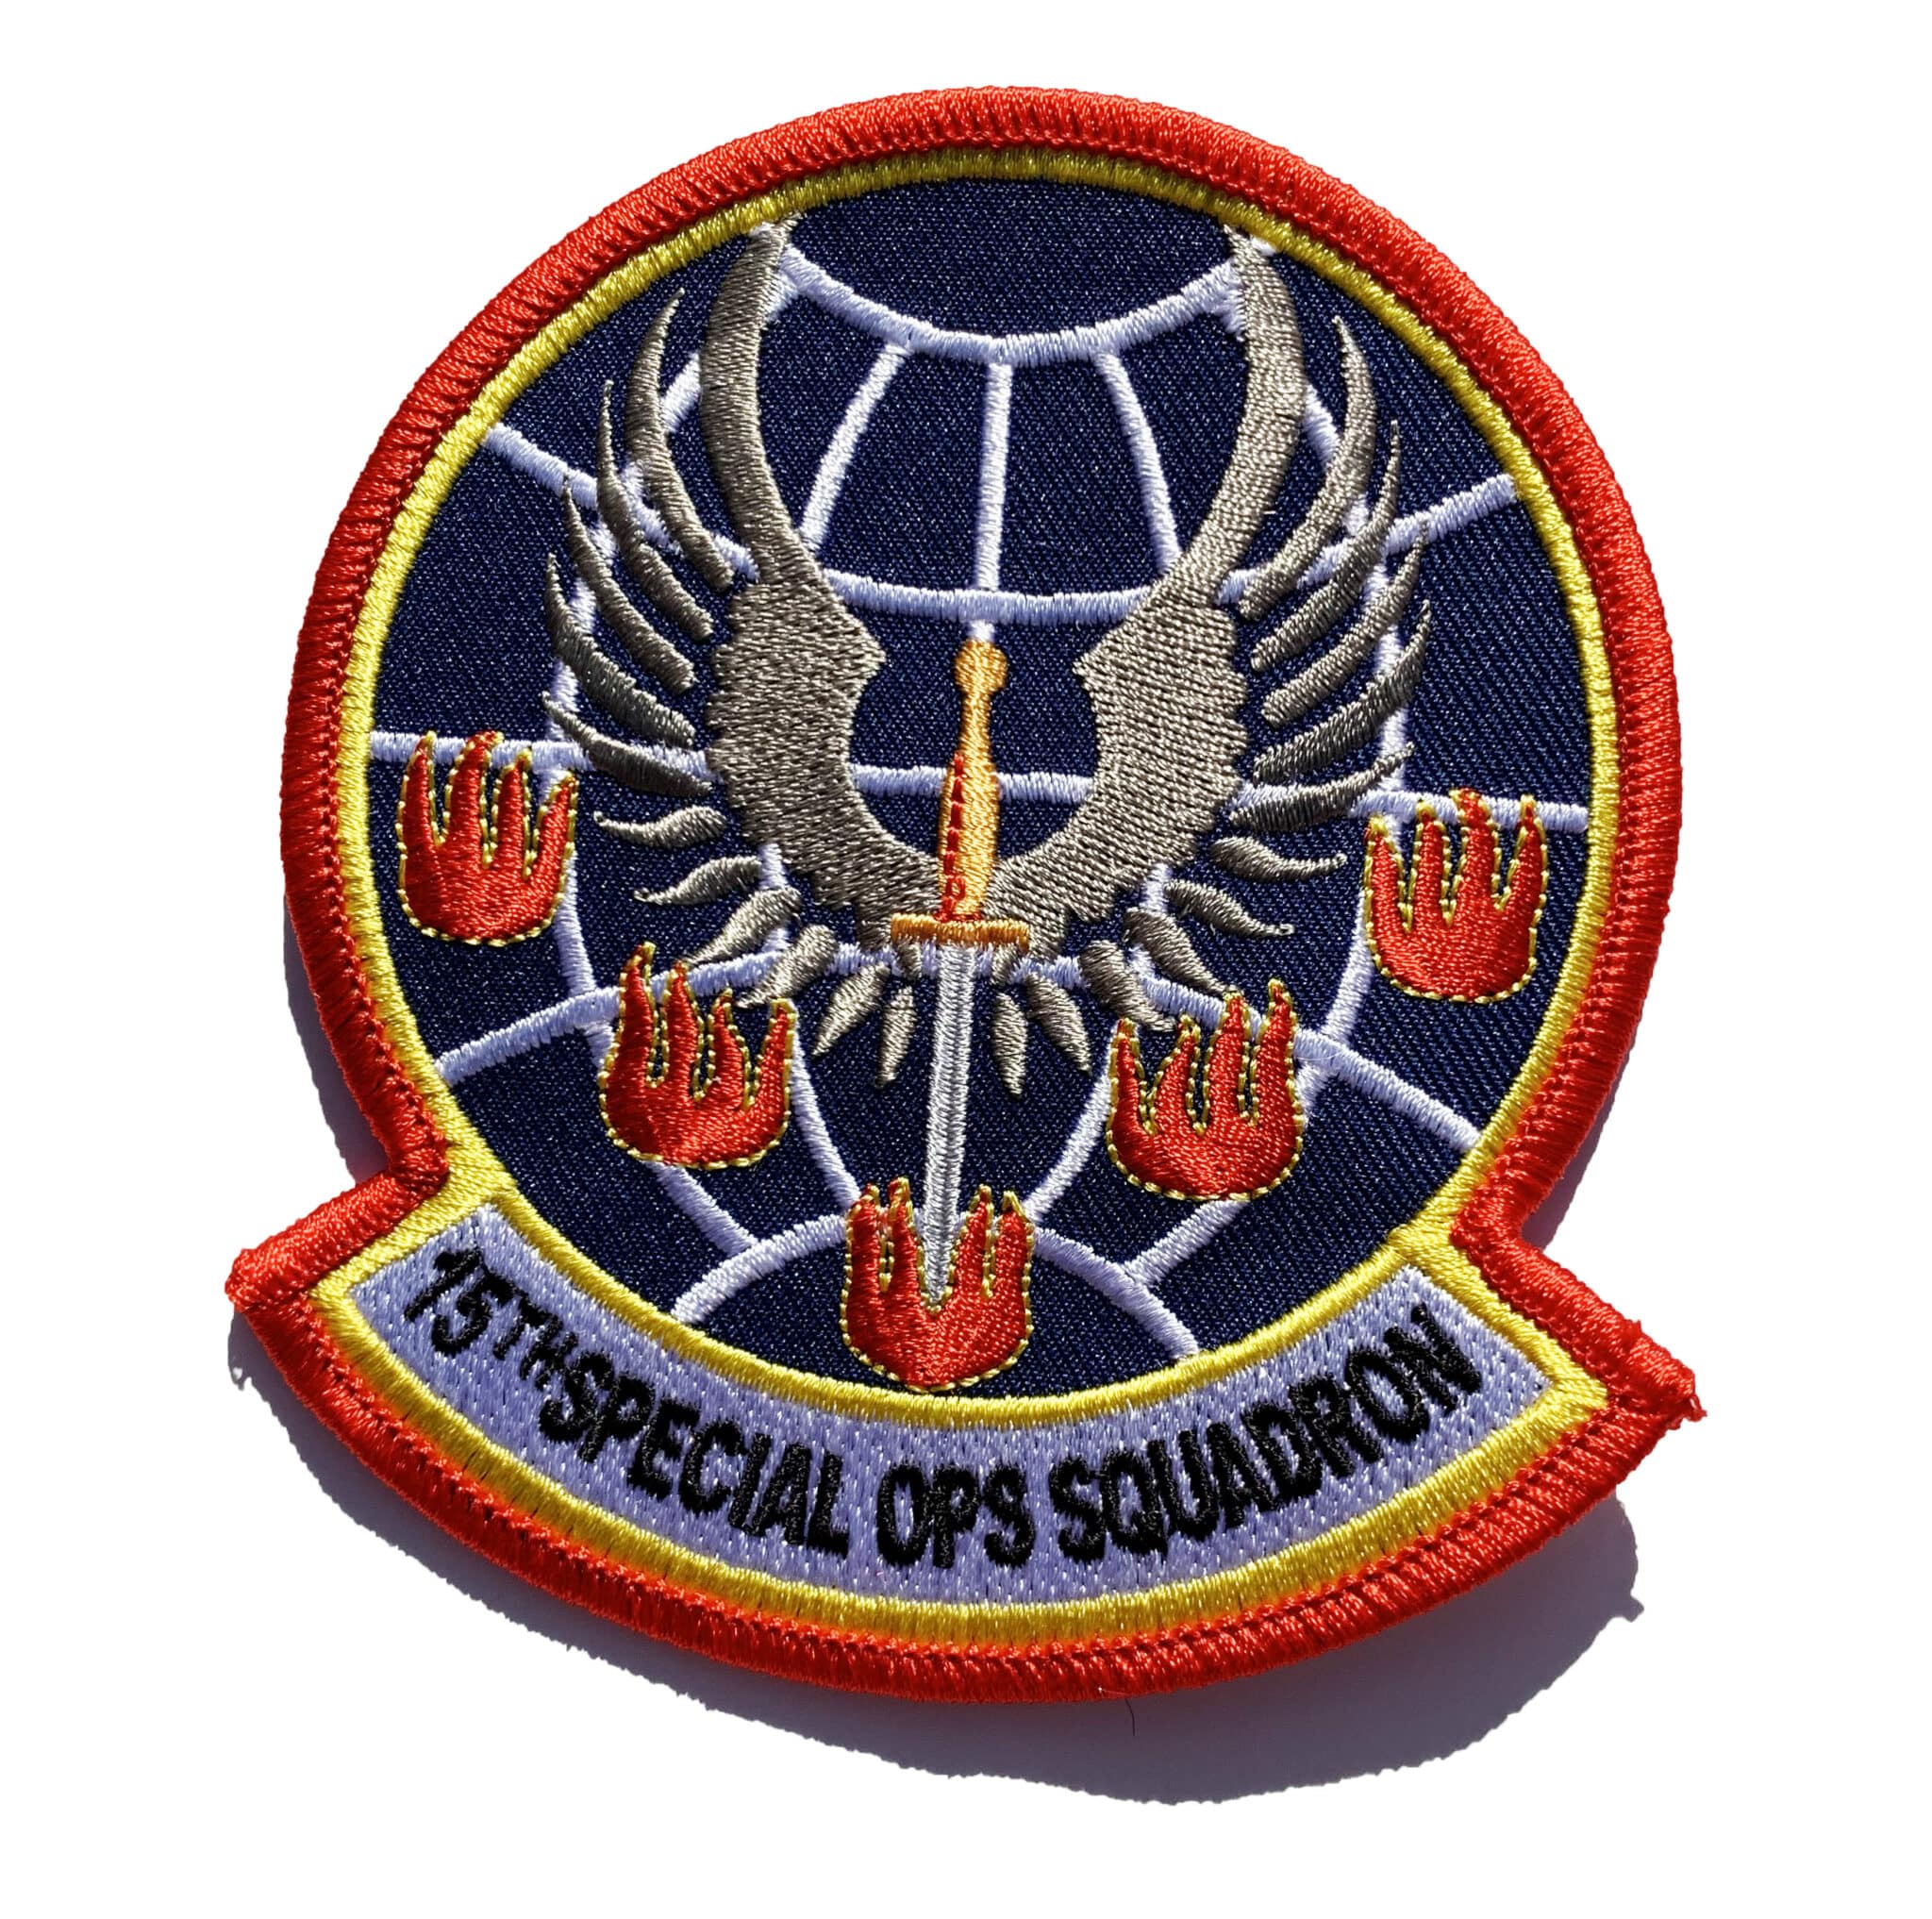 ESSENTIAL AF USAF 15th EXPEDITIONARY SPECIAL OPERATIONS SQ ORIGINAL PATCH 